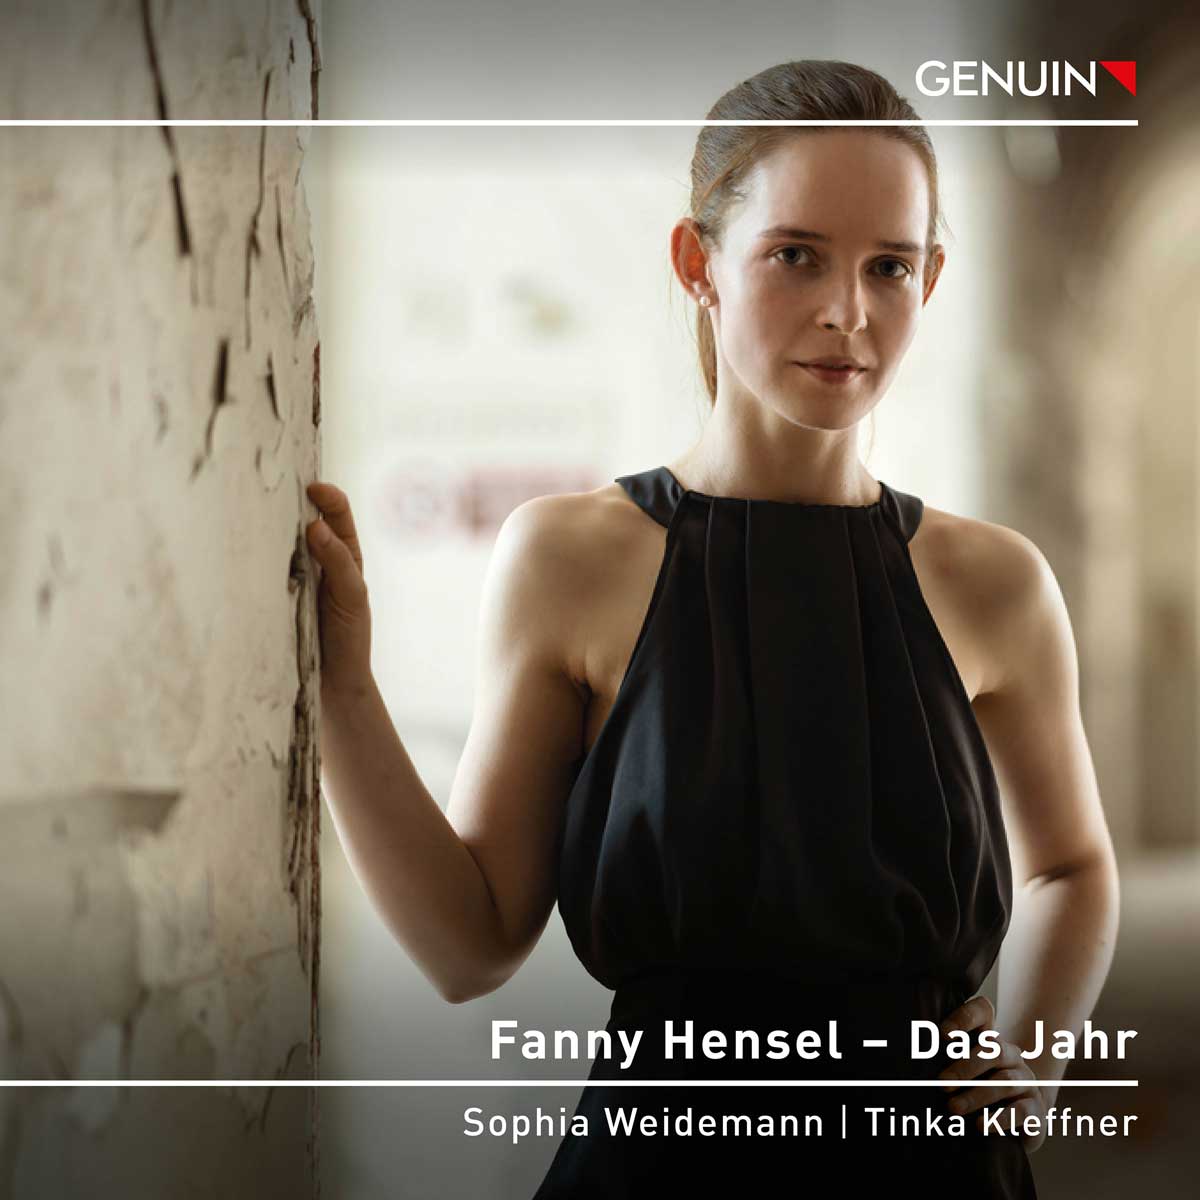 CD album cover 'Fanny Hensel - Das Jahr (The Year)' (GEN 24872) with Sophia Weidemann, Tinka Kleffner